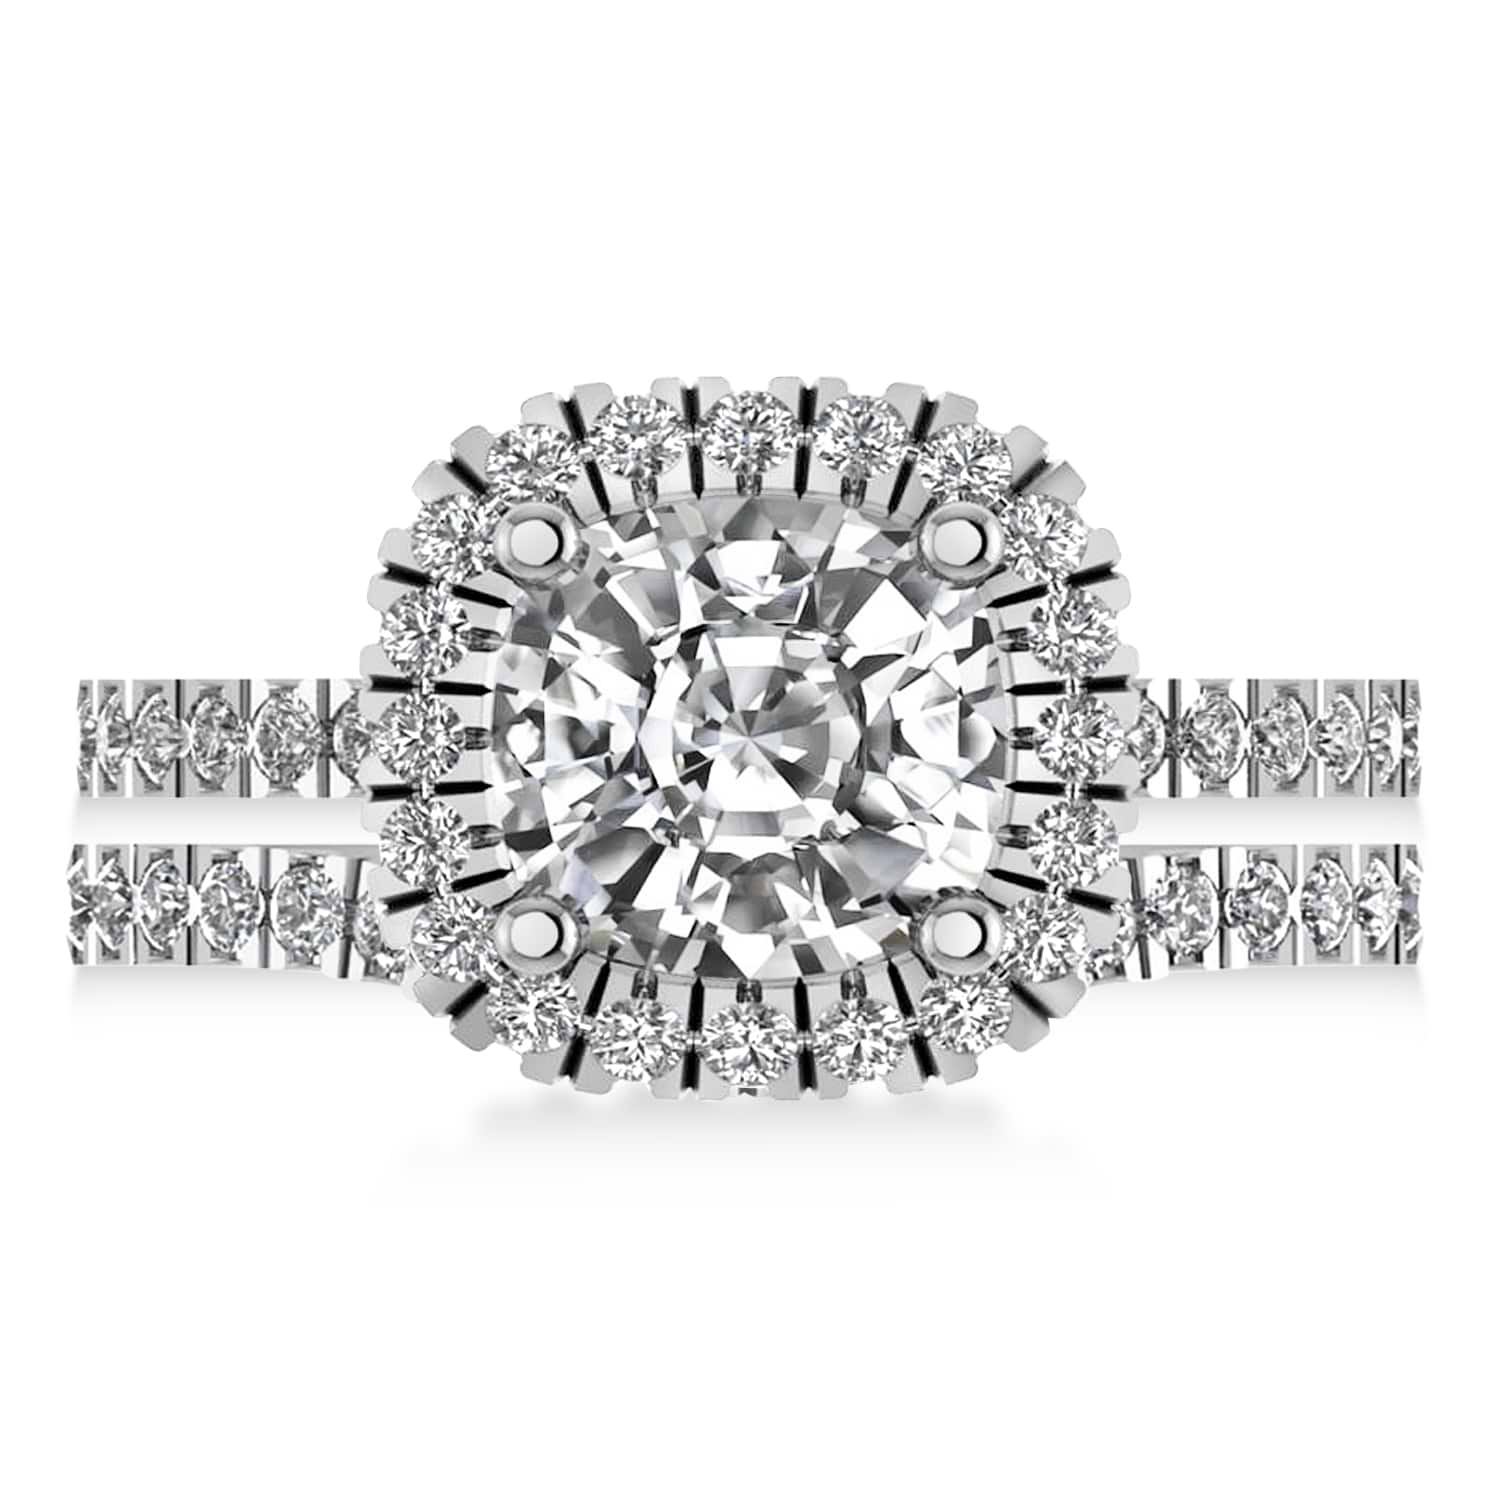 Moissanite & Diamonds Cushion-Cut Halo Bridal Set 14K White Gold (2.93ct)